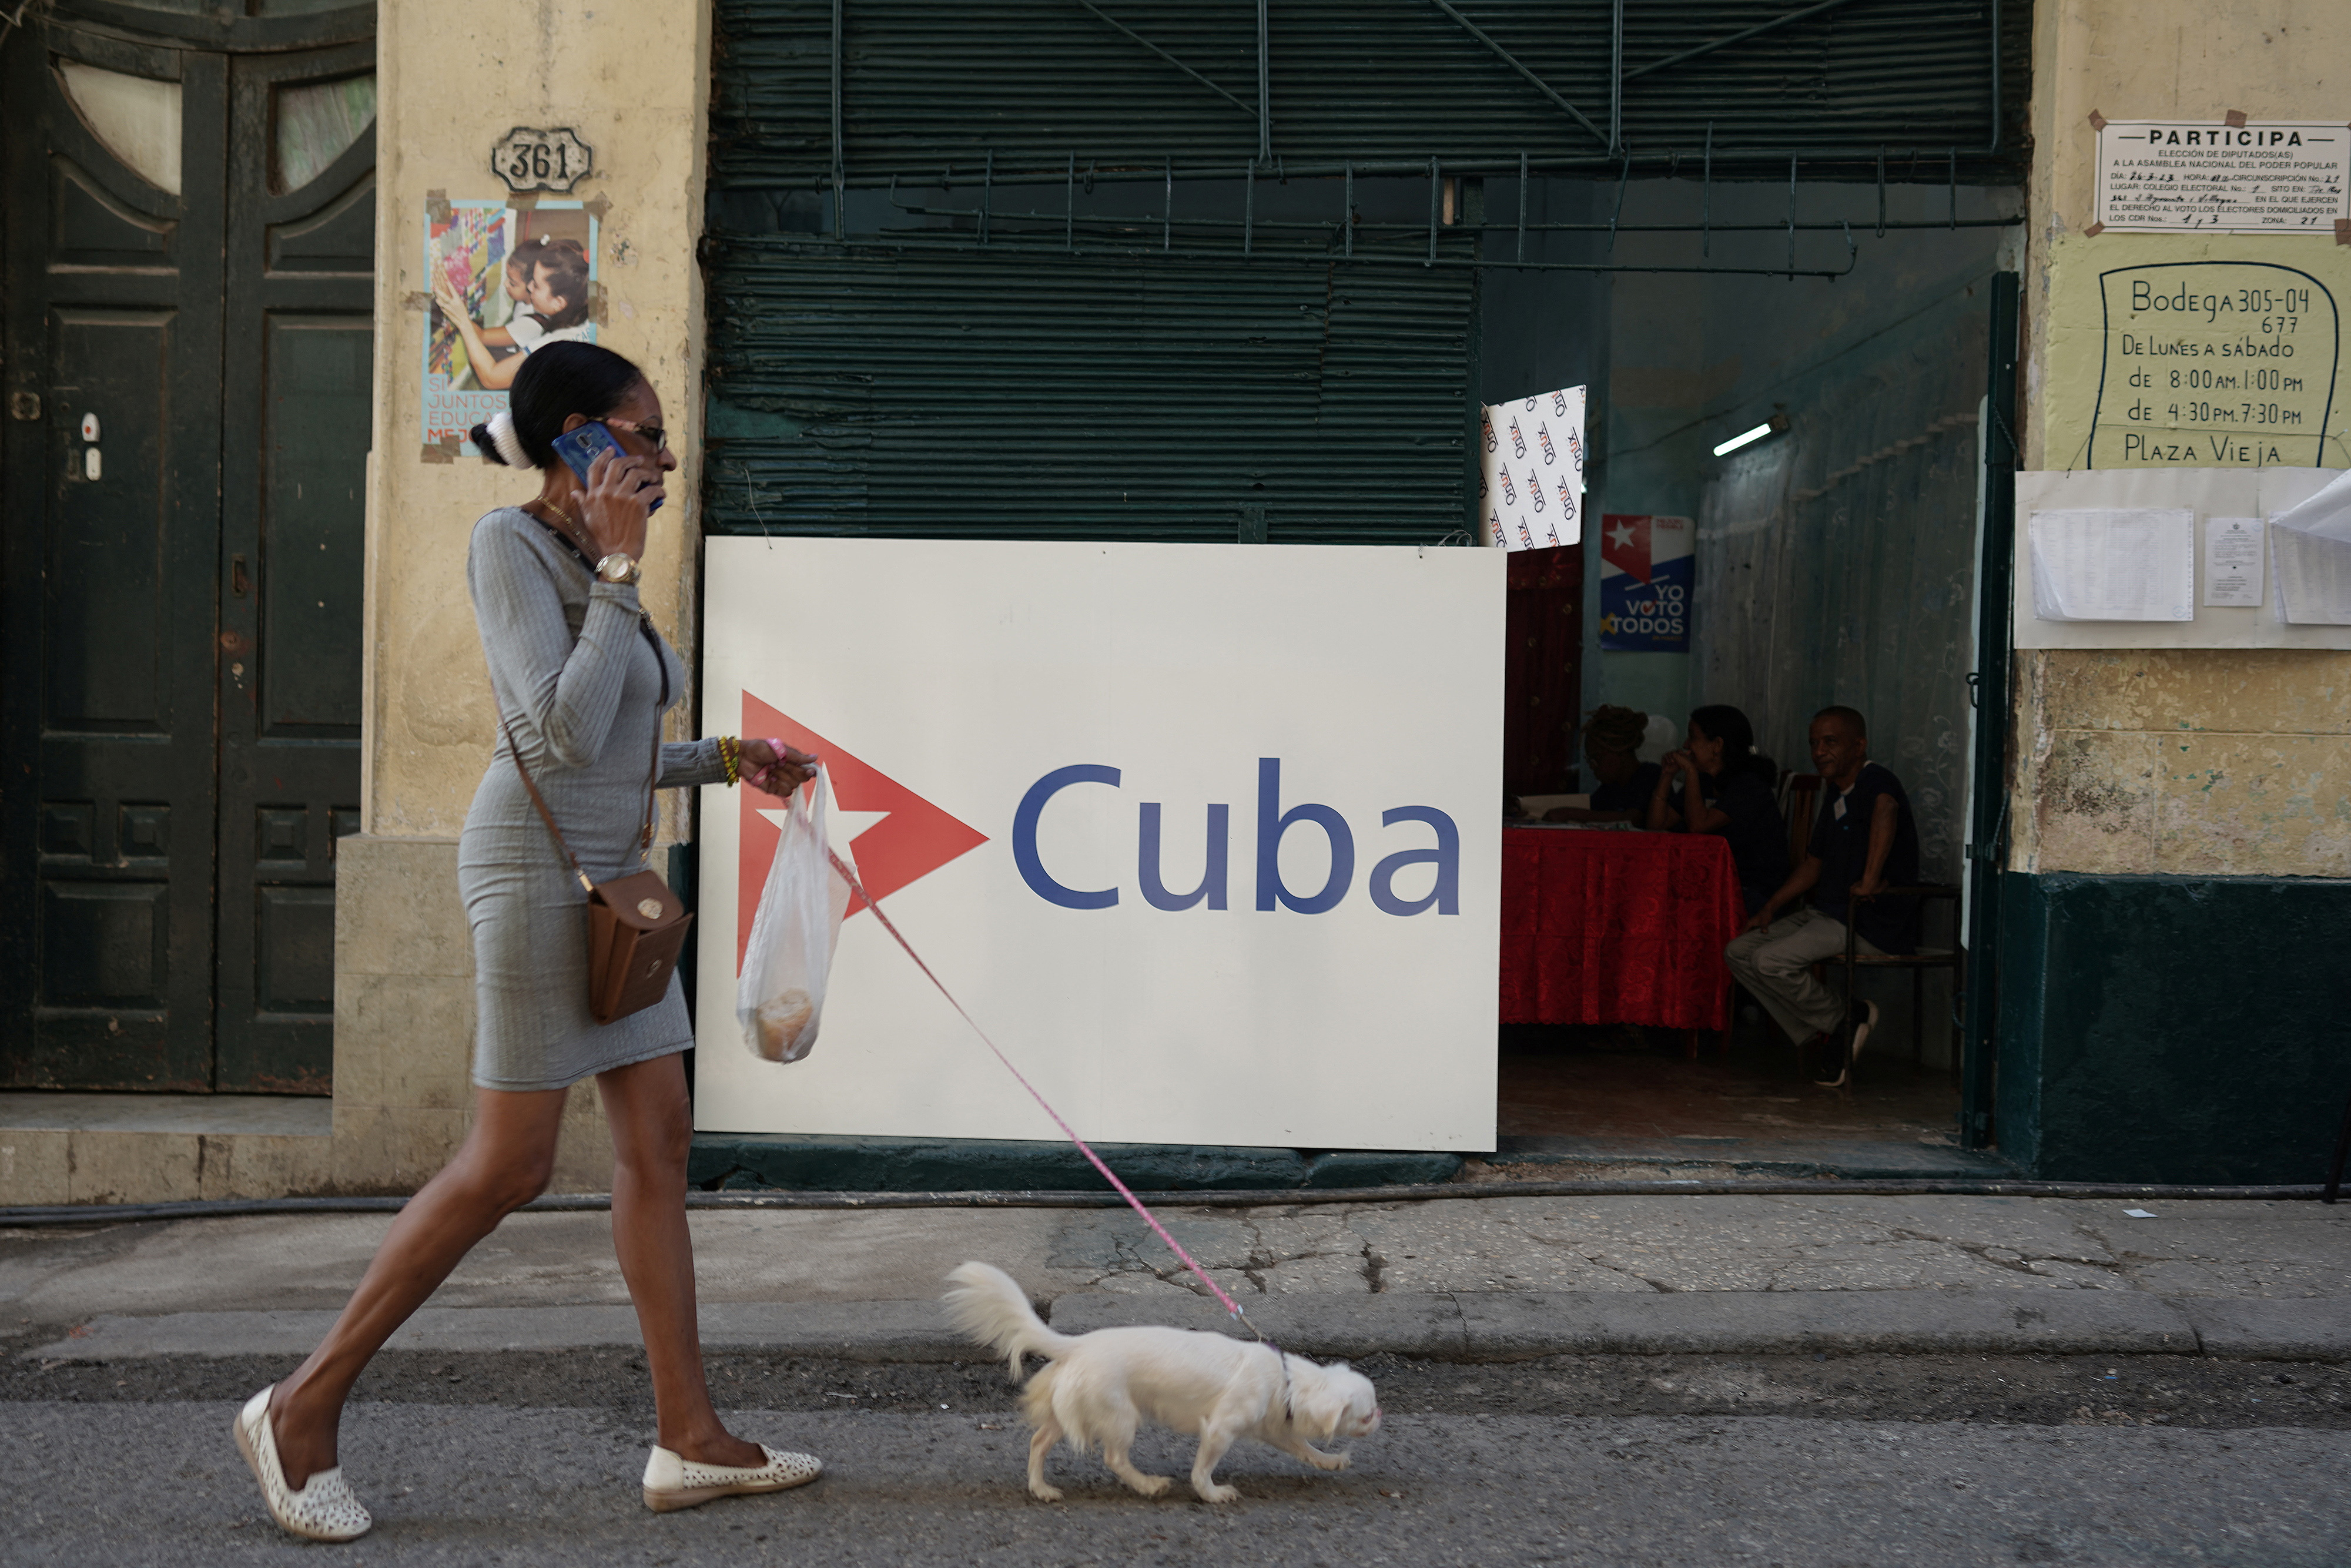 Legislative elections take place in Cuba